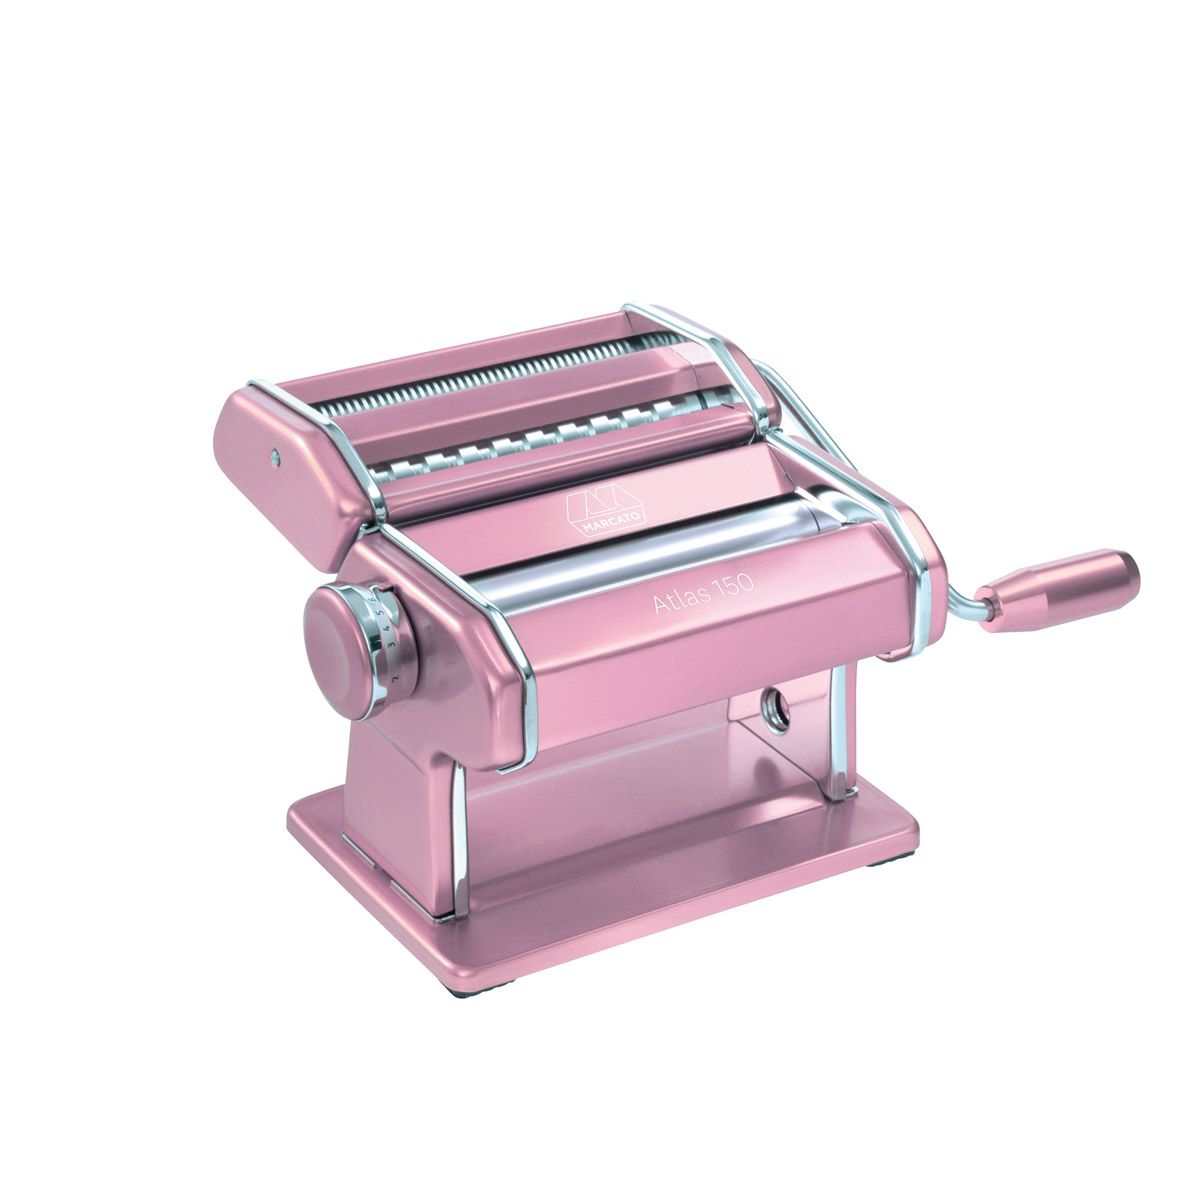 Marcato Atlas 150 Pasta Machine, Pink